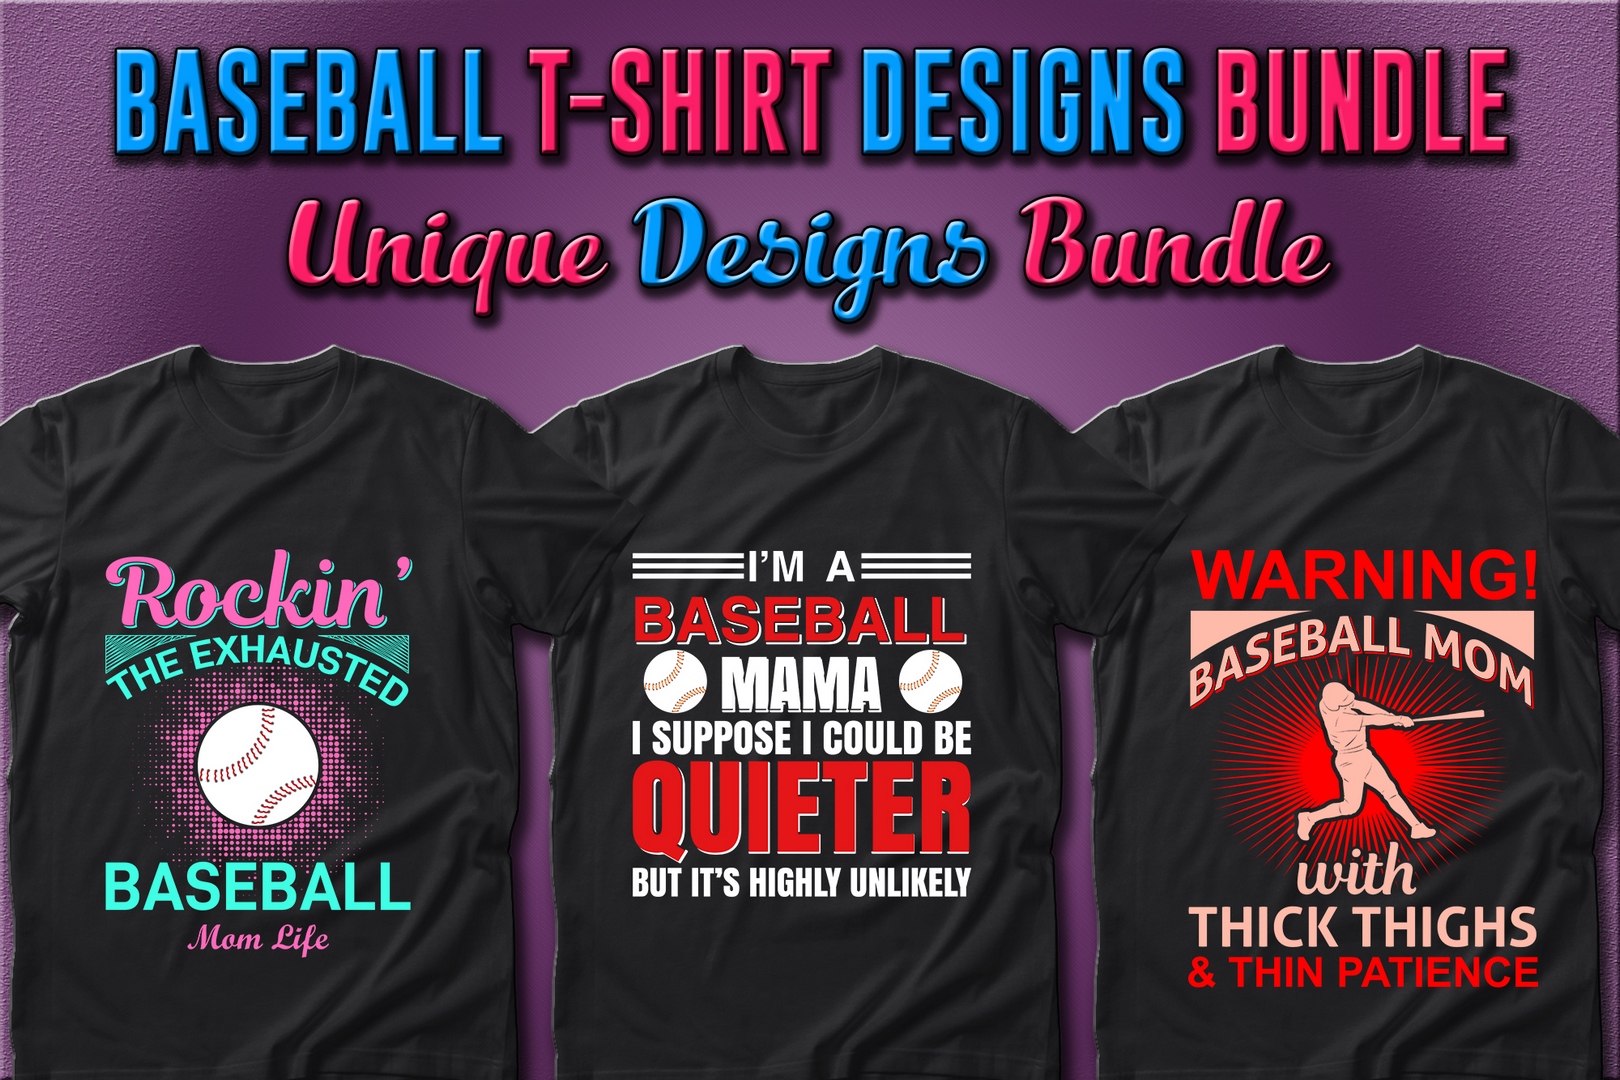 38-baseball-t-shirt-designs-bundle